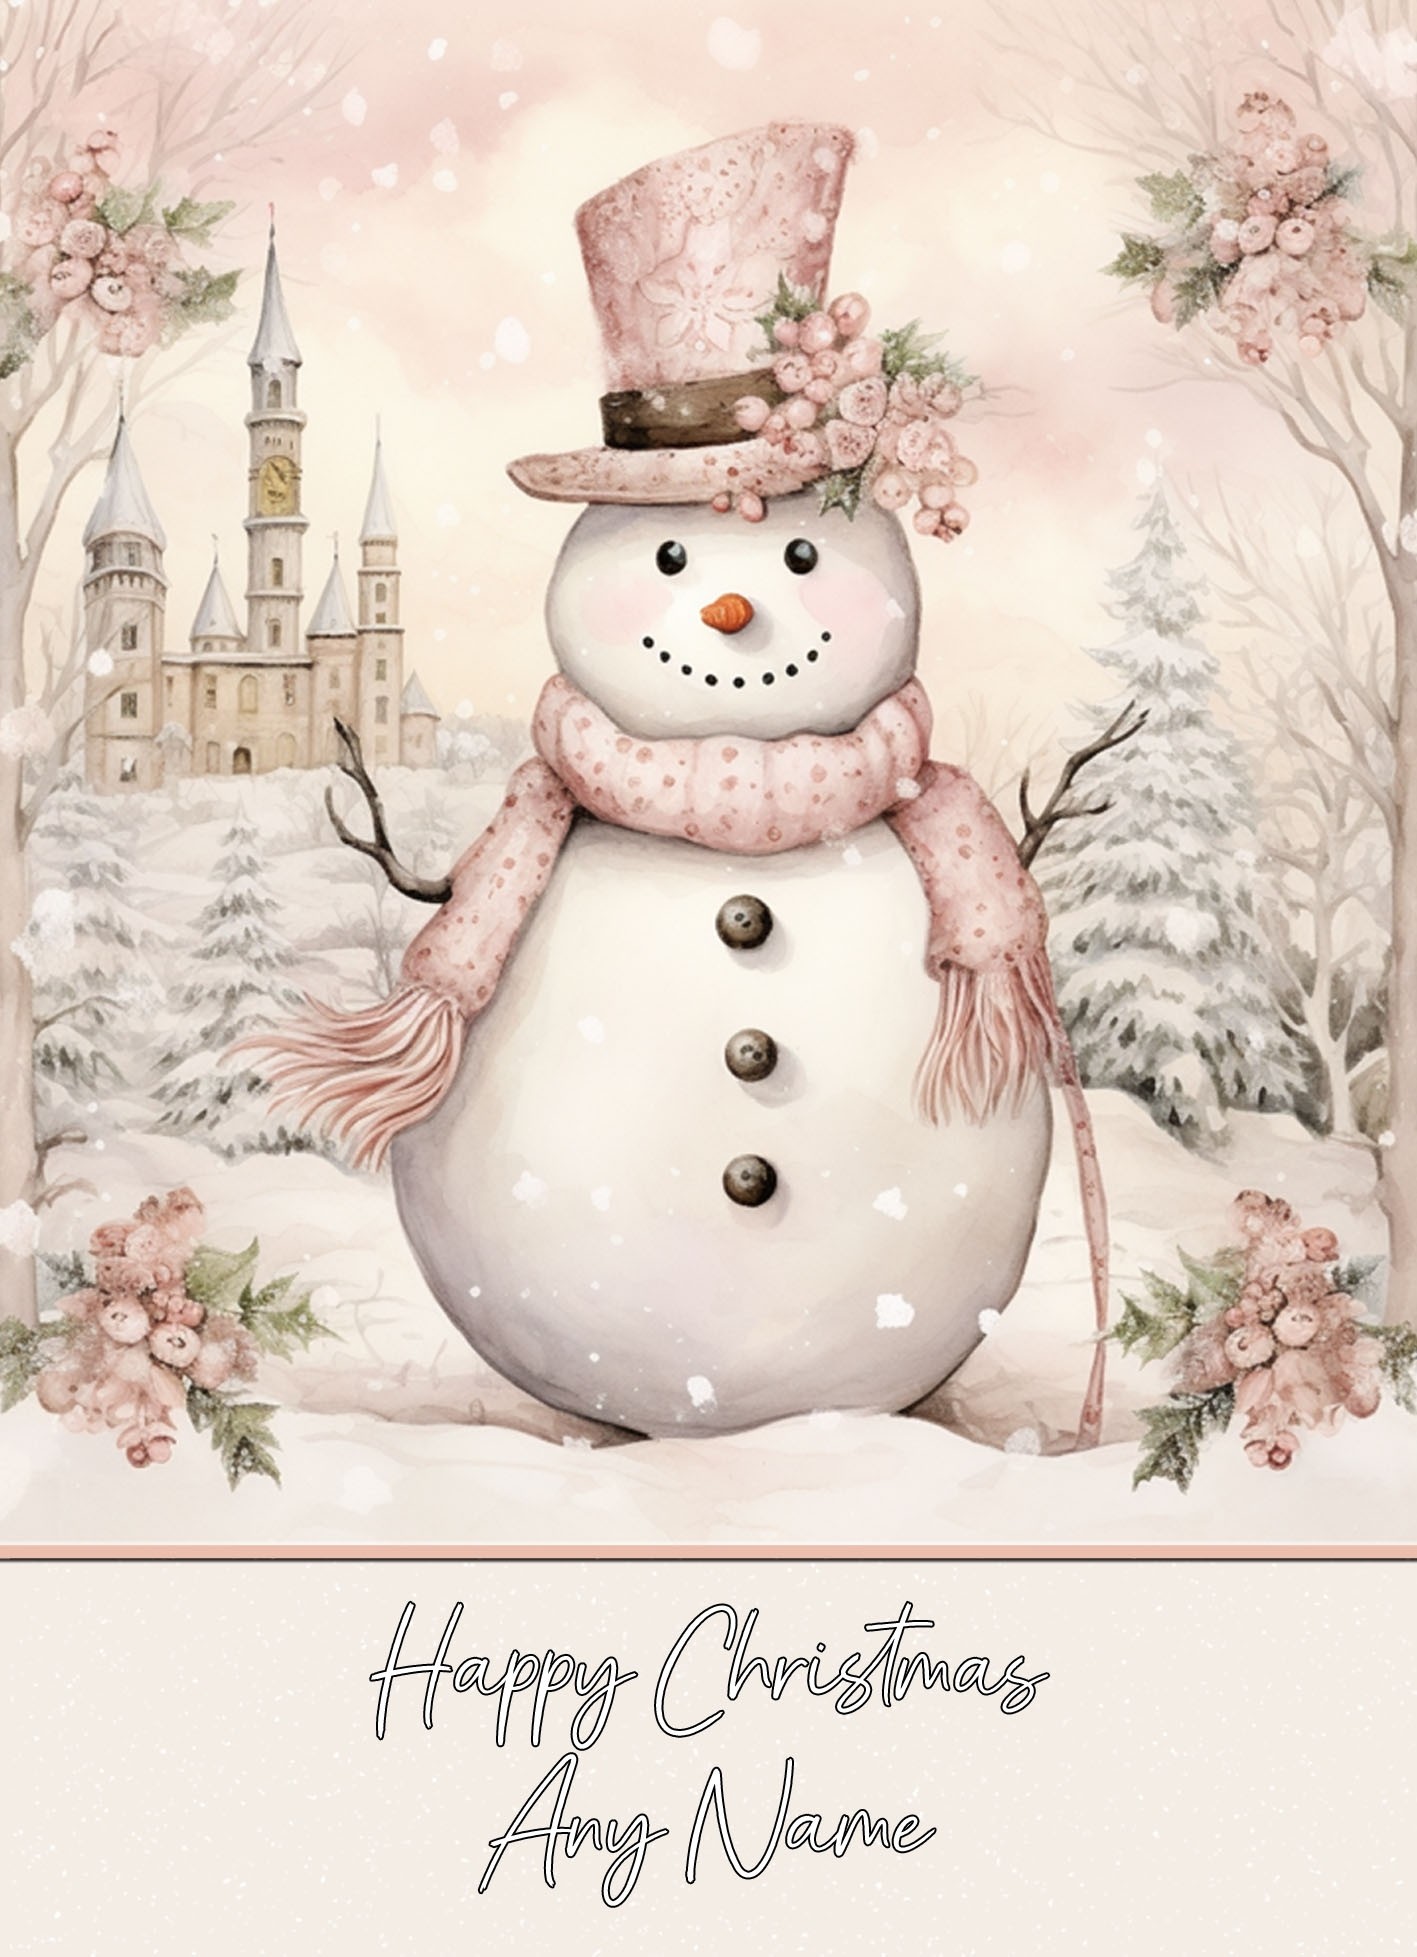 Personalised Snowman Art Christmas Card (Design 5)